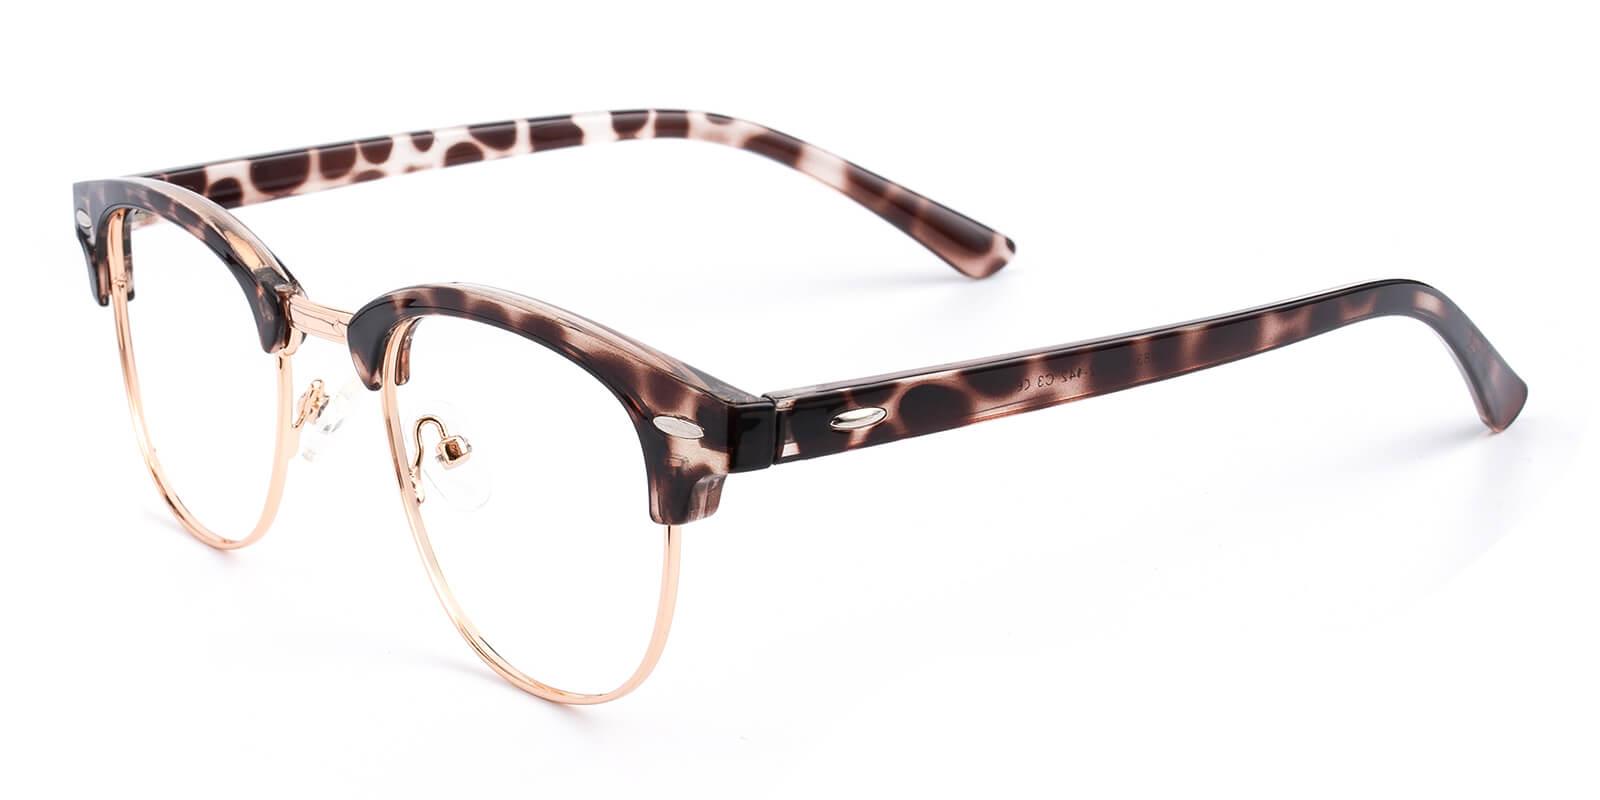 Creative-Leopard-Browline-Combination / Metal / Plastic-Eyeglasses-detail